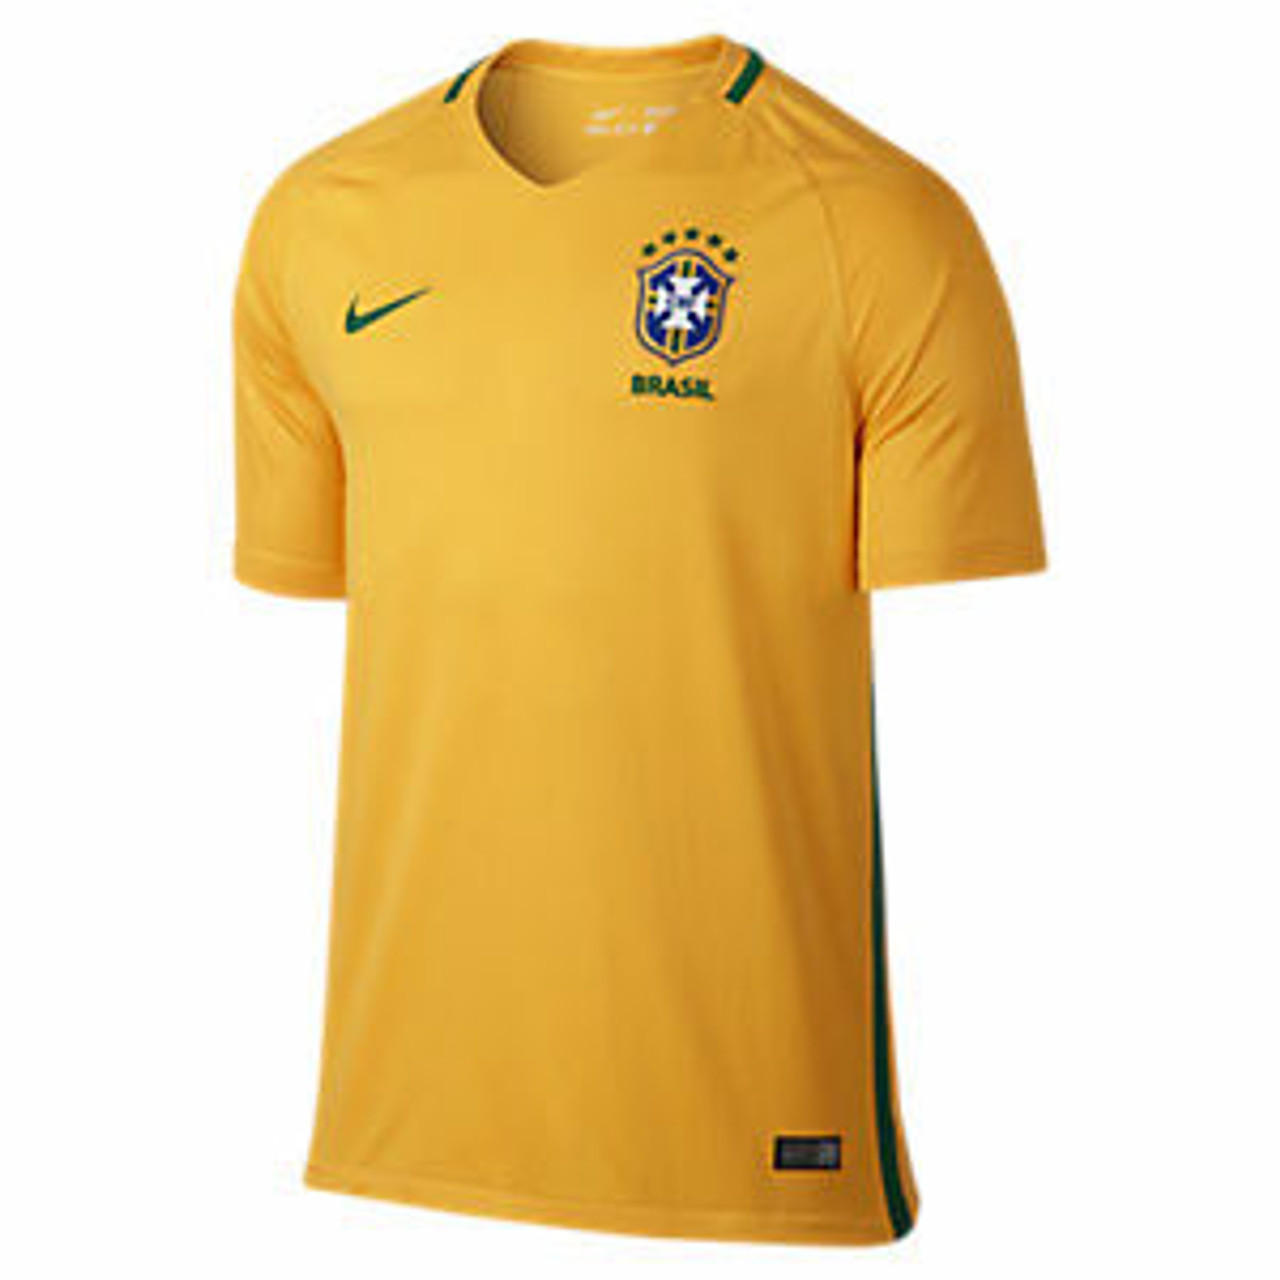 Nike Brazil Youth Away Jersey Copa America 2016